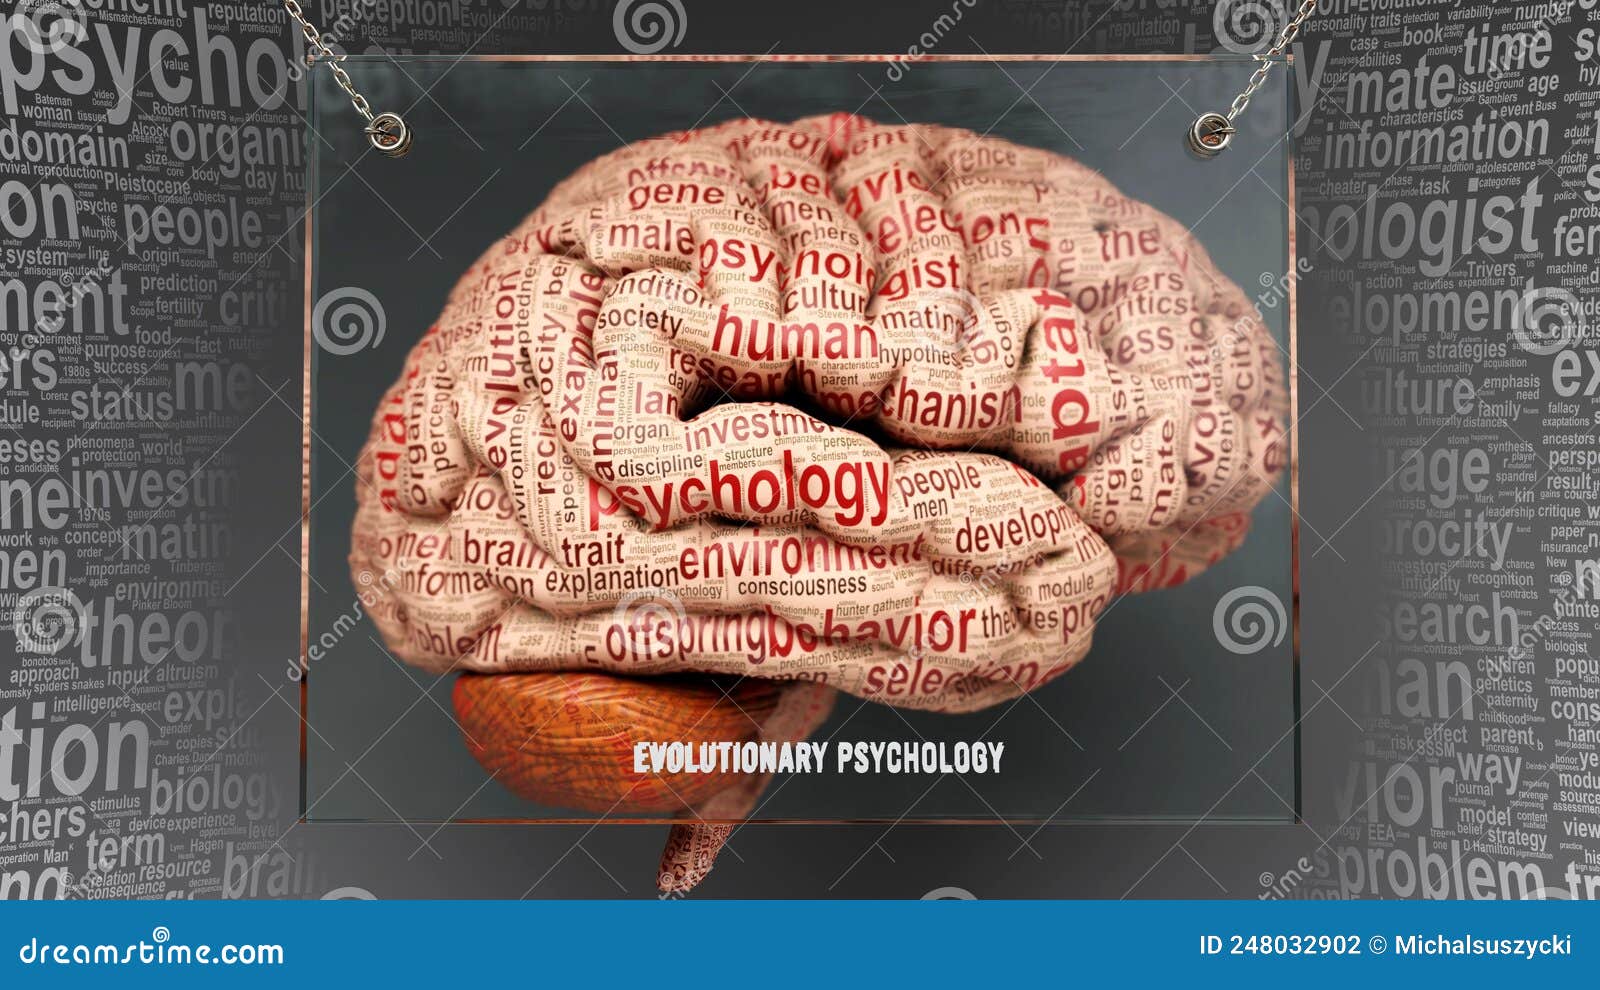 evolutionary psychology in human brain